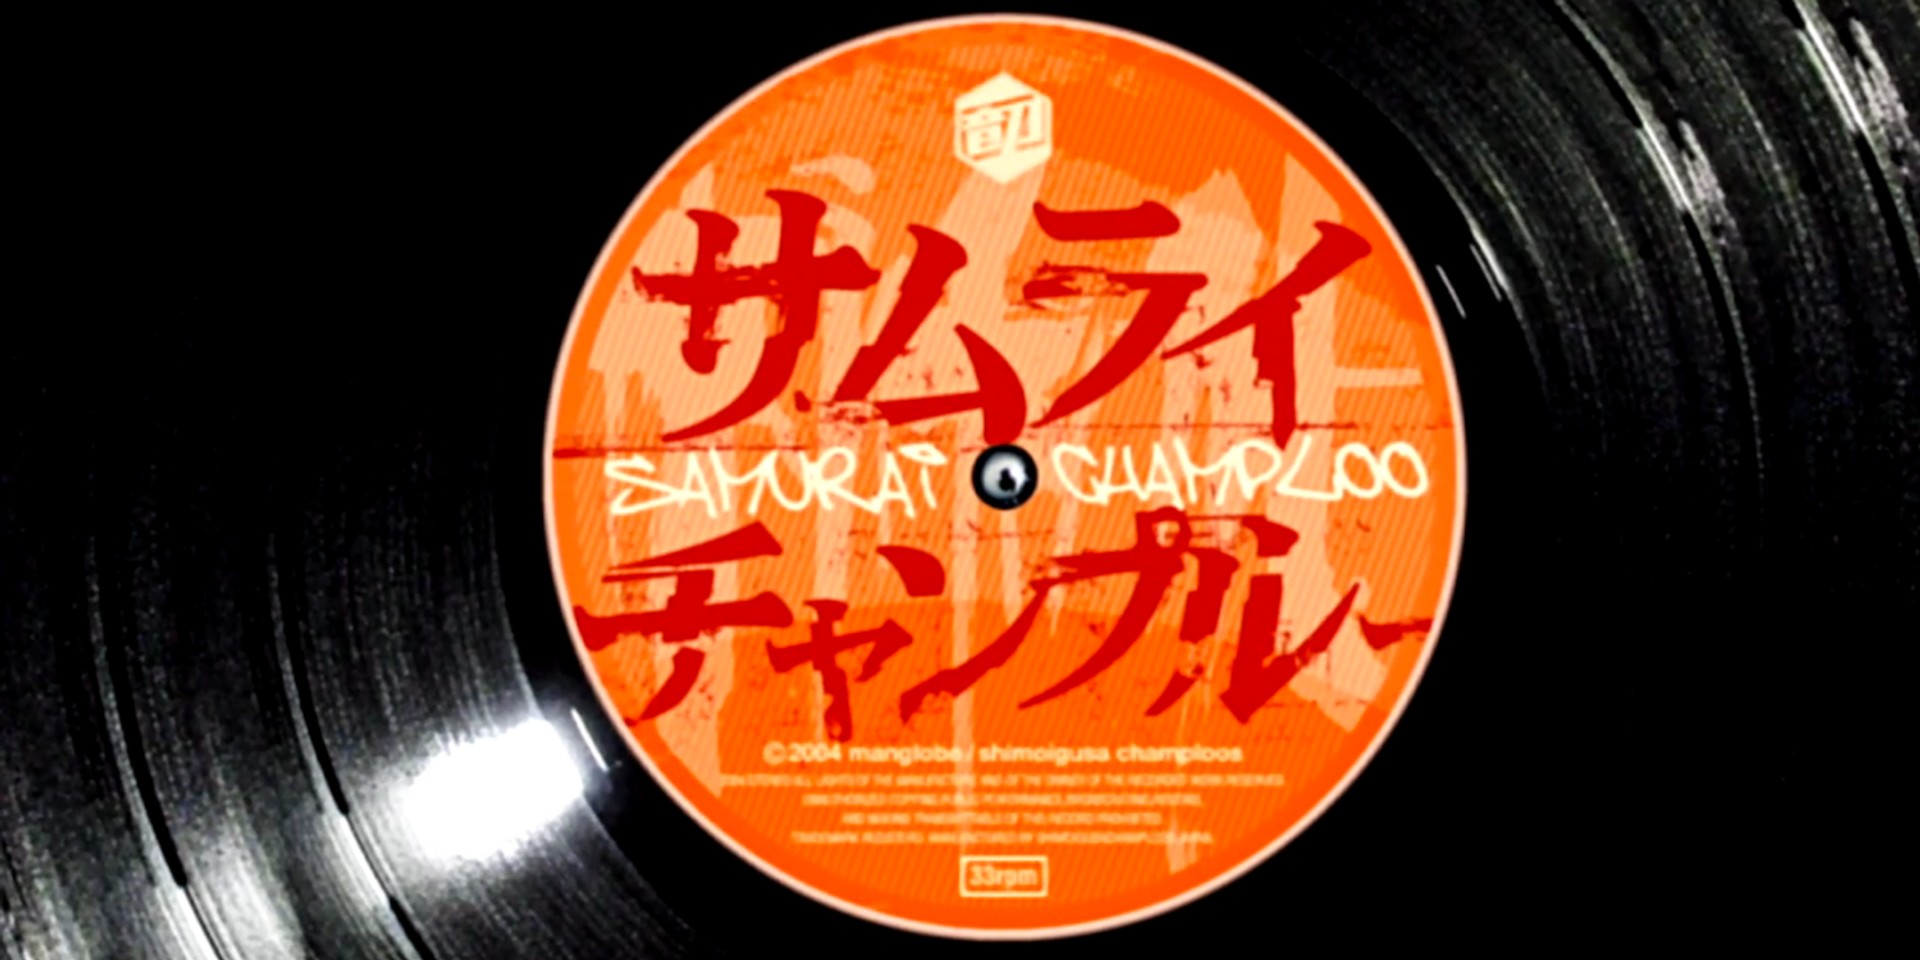 Essentials: Nujabes & Fat Jon's Samurai Champloo Music Record - Departure (2004)